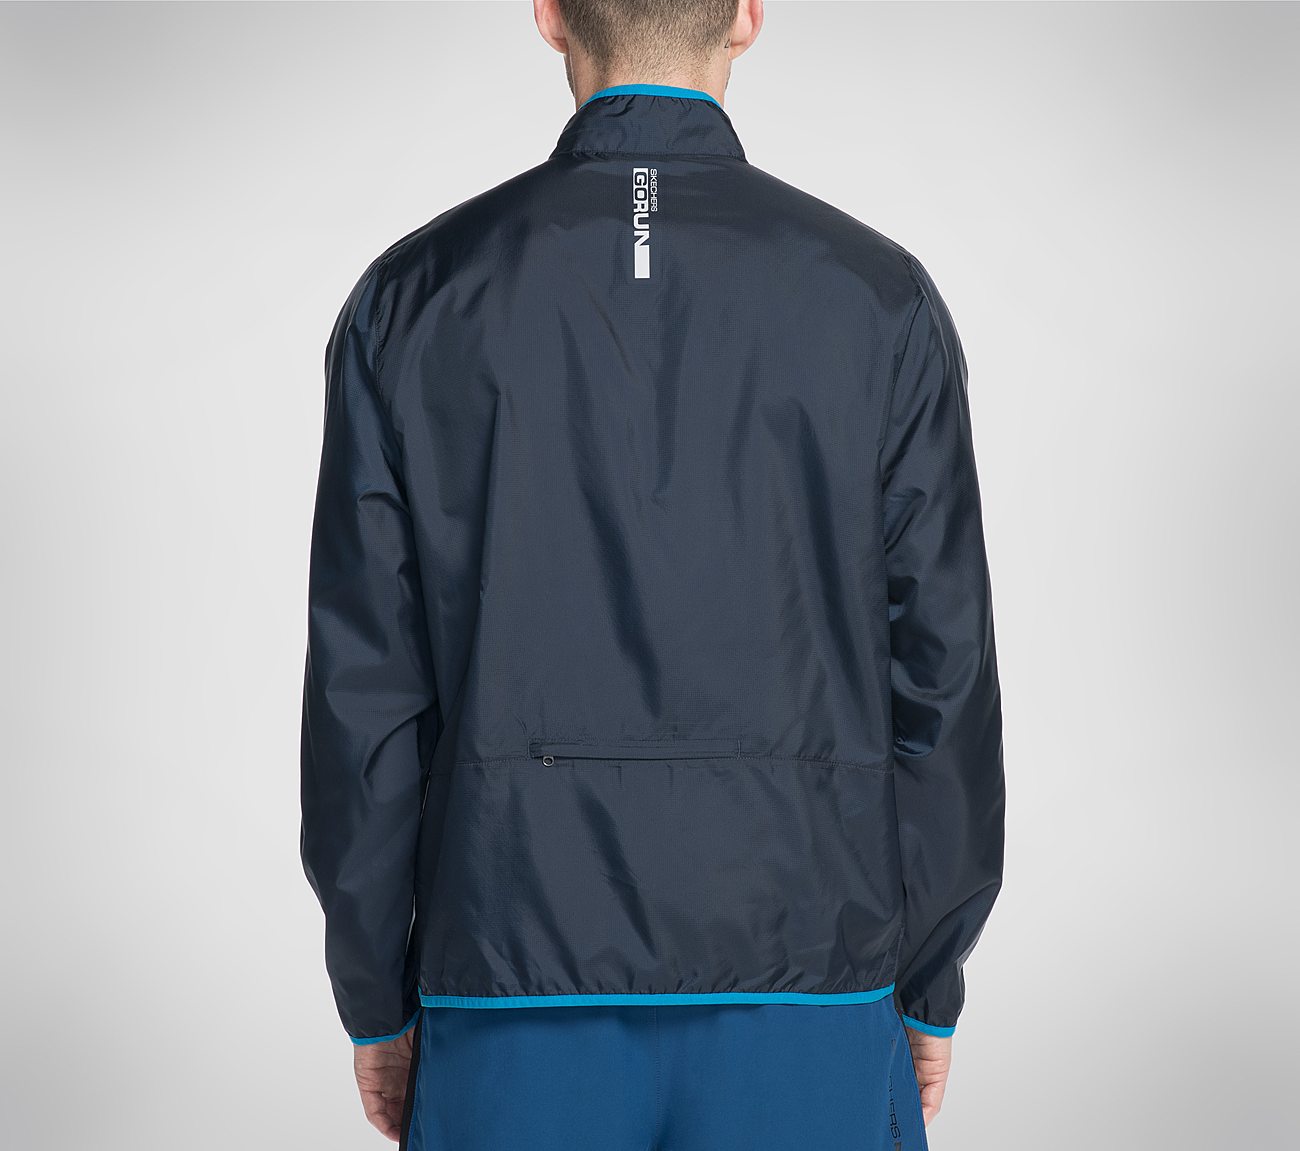 SKECHERS GOrun Packable Jacket Jackets 